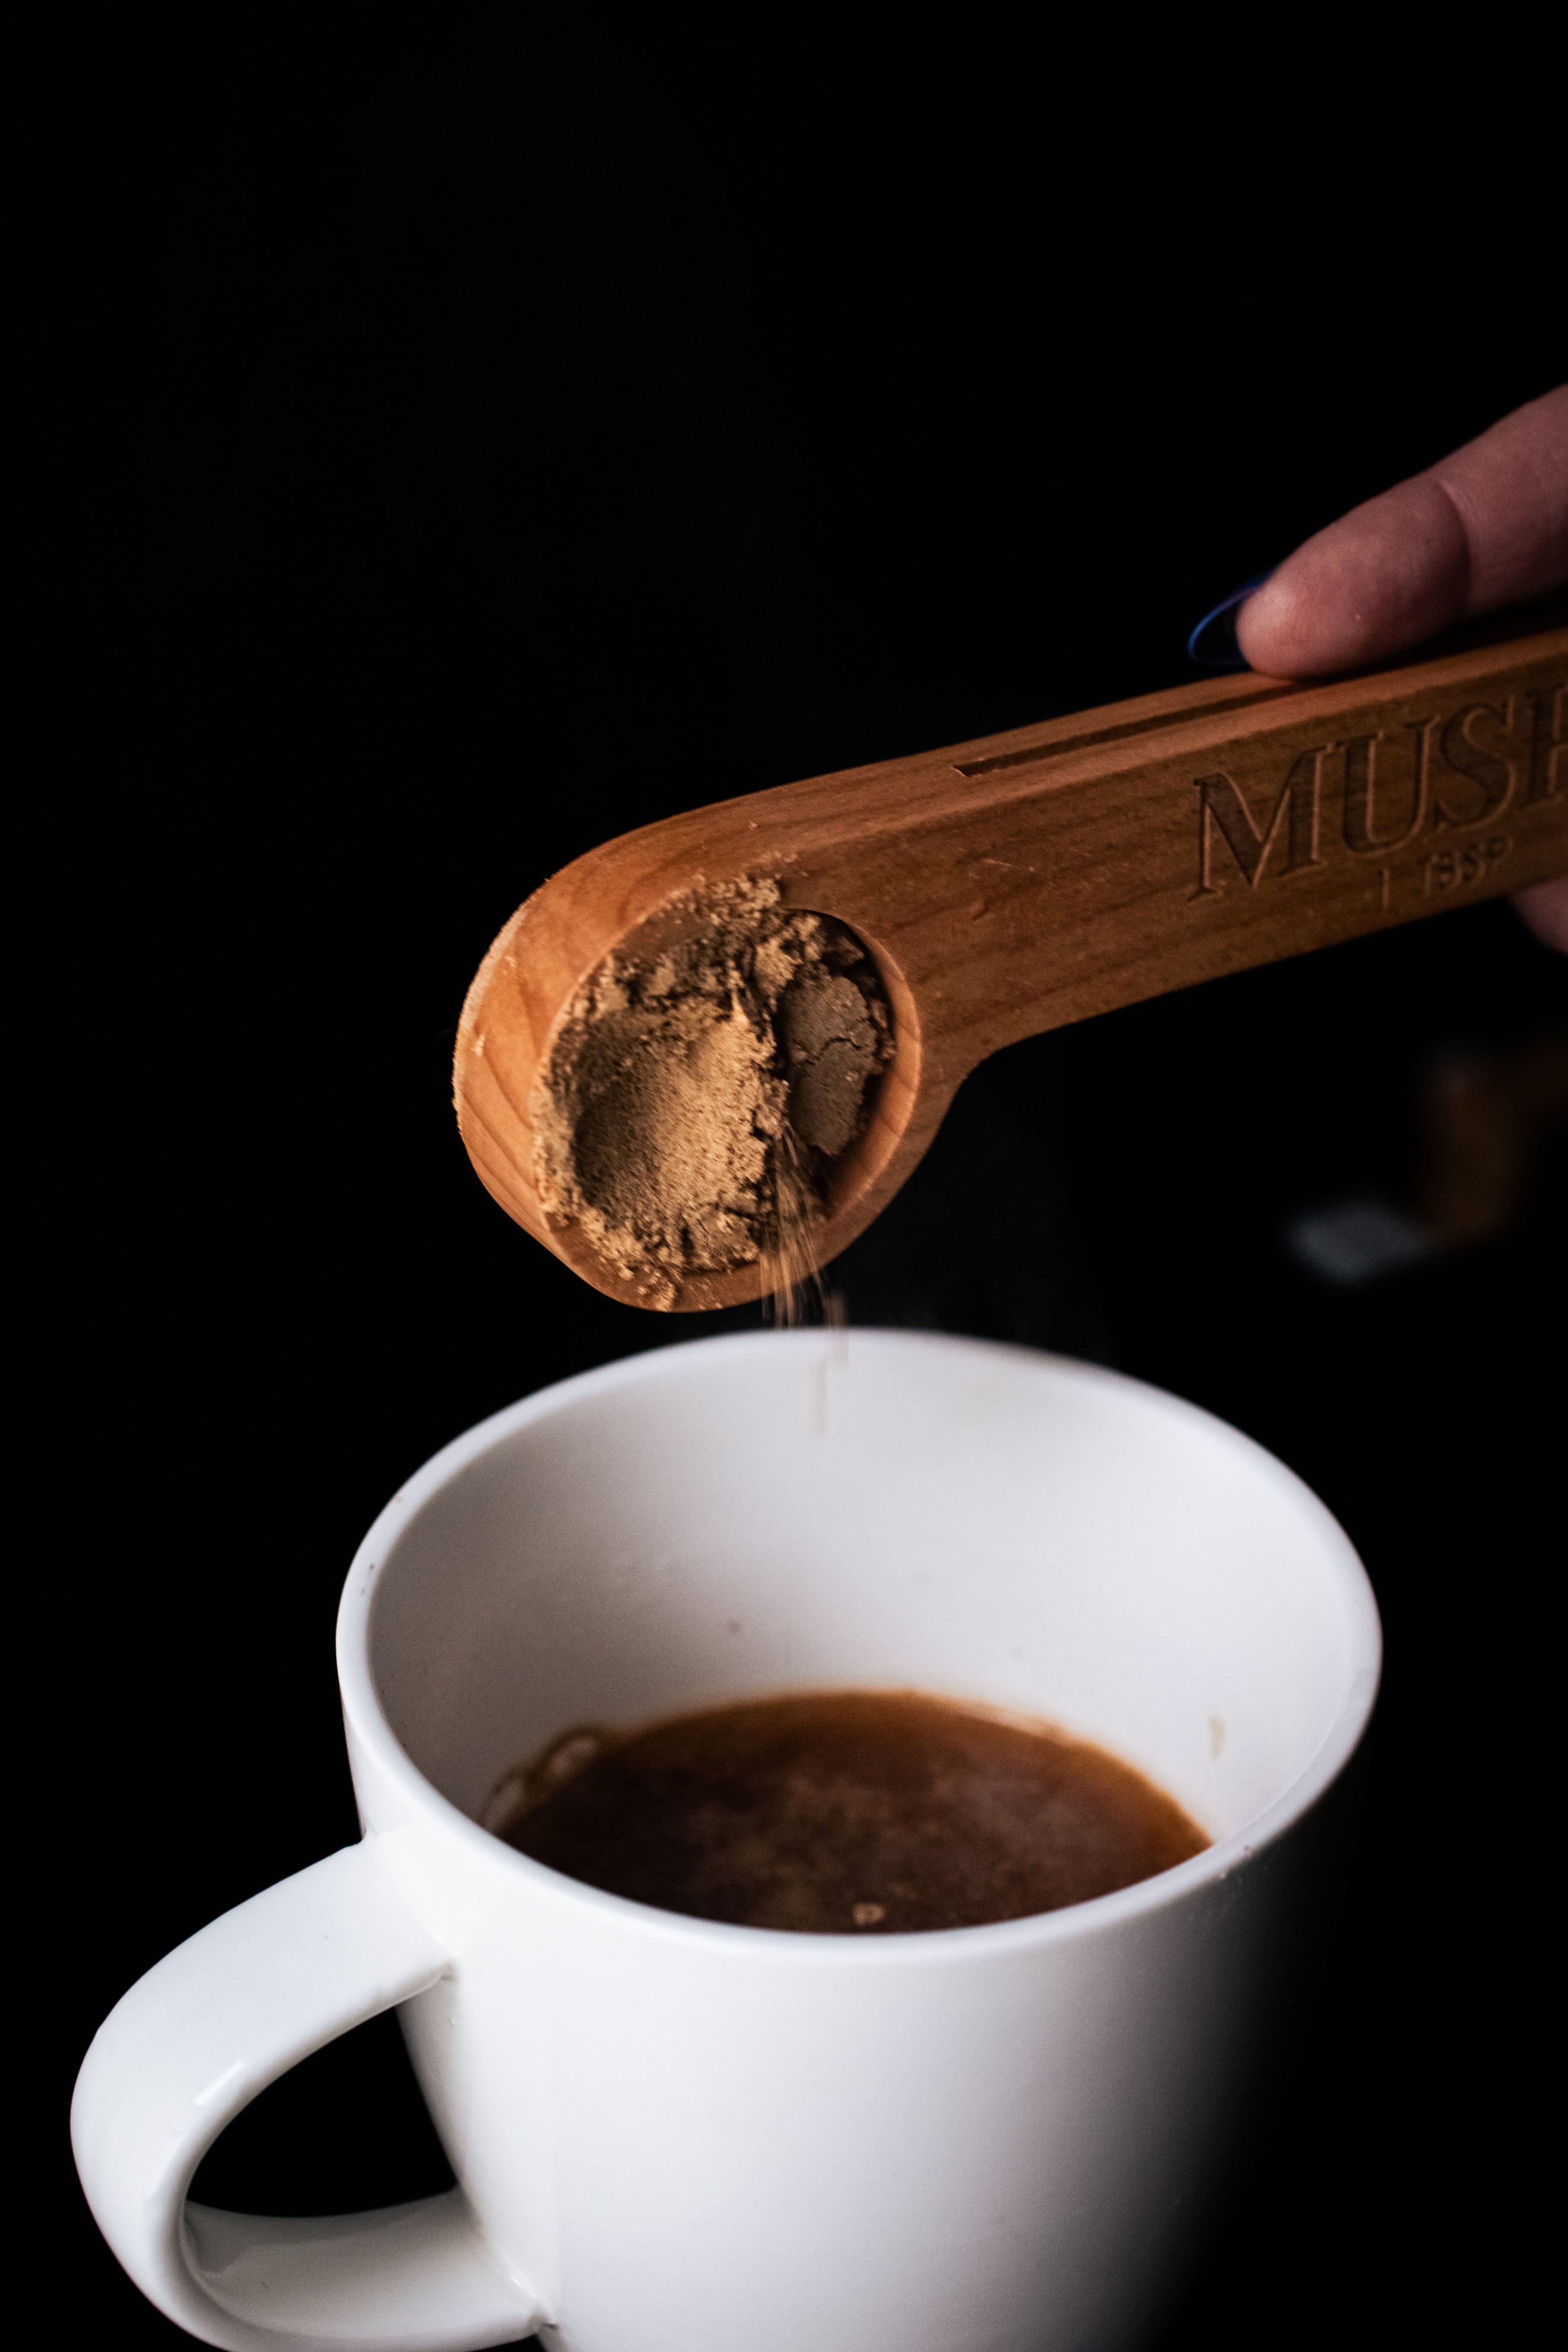 Mushi Mushroom Coffee - (30 Servings)